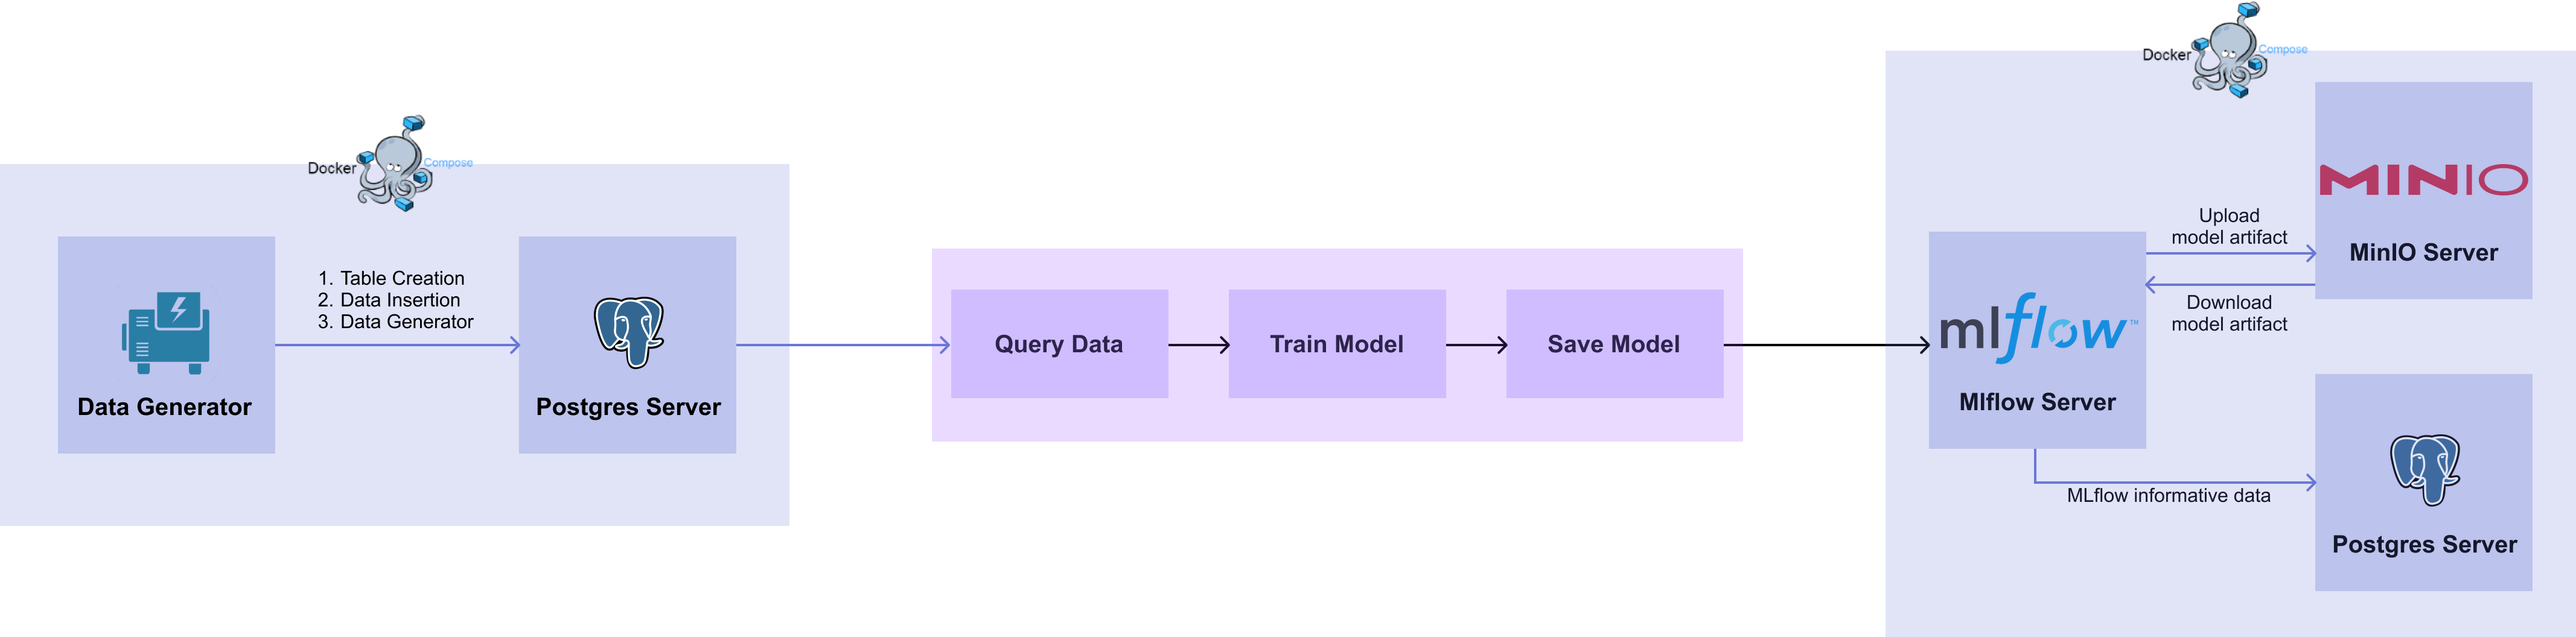 Model registry Workflow